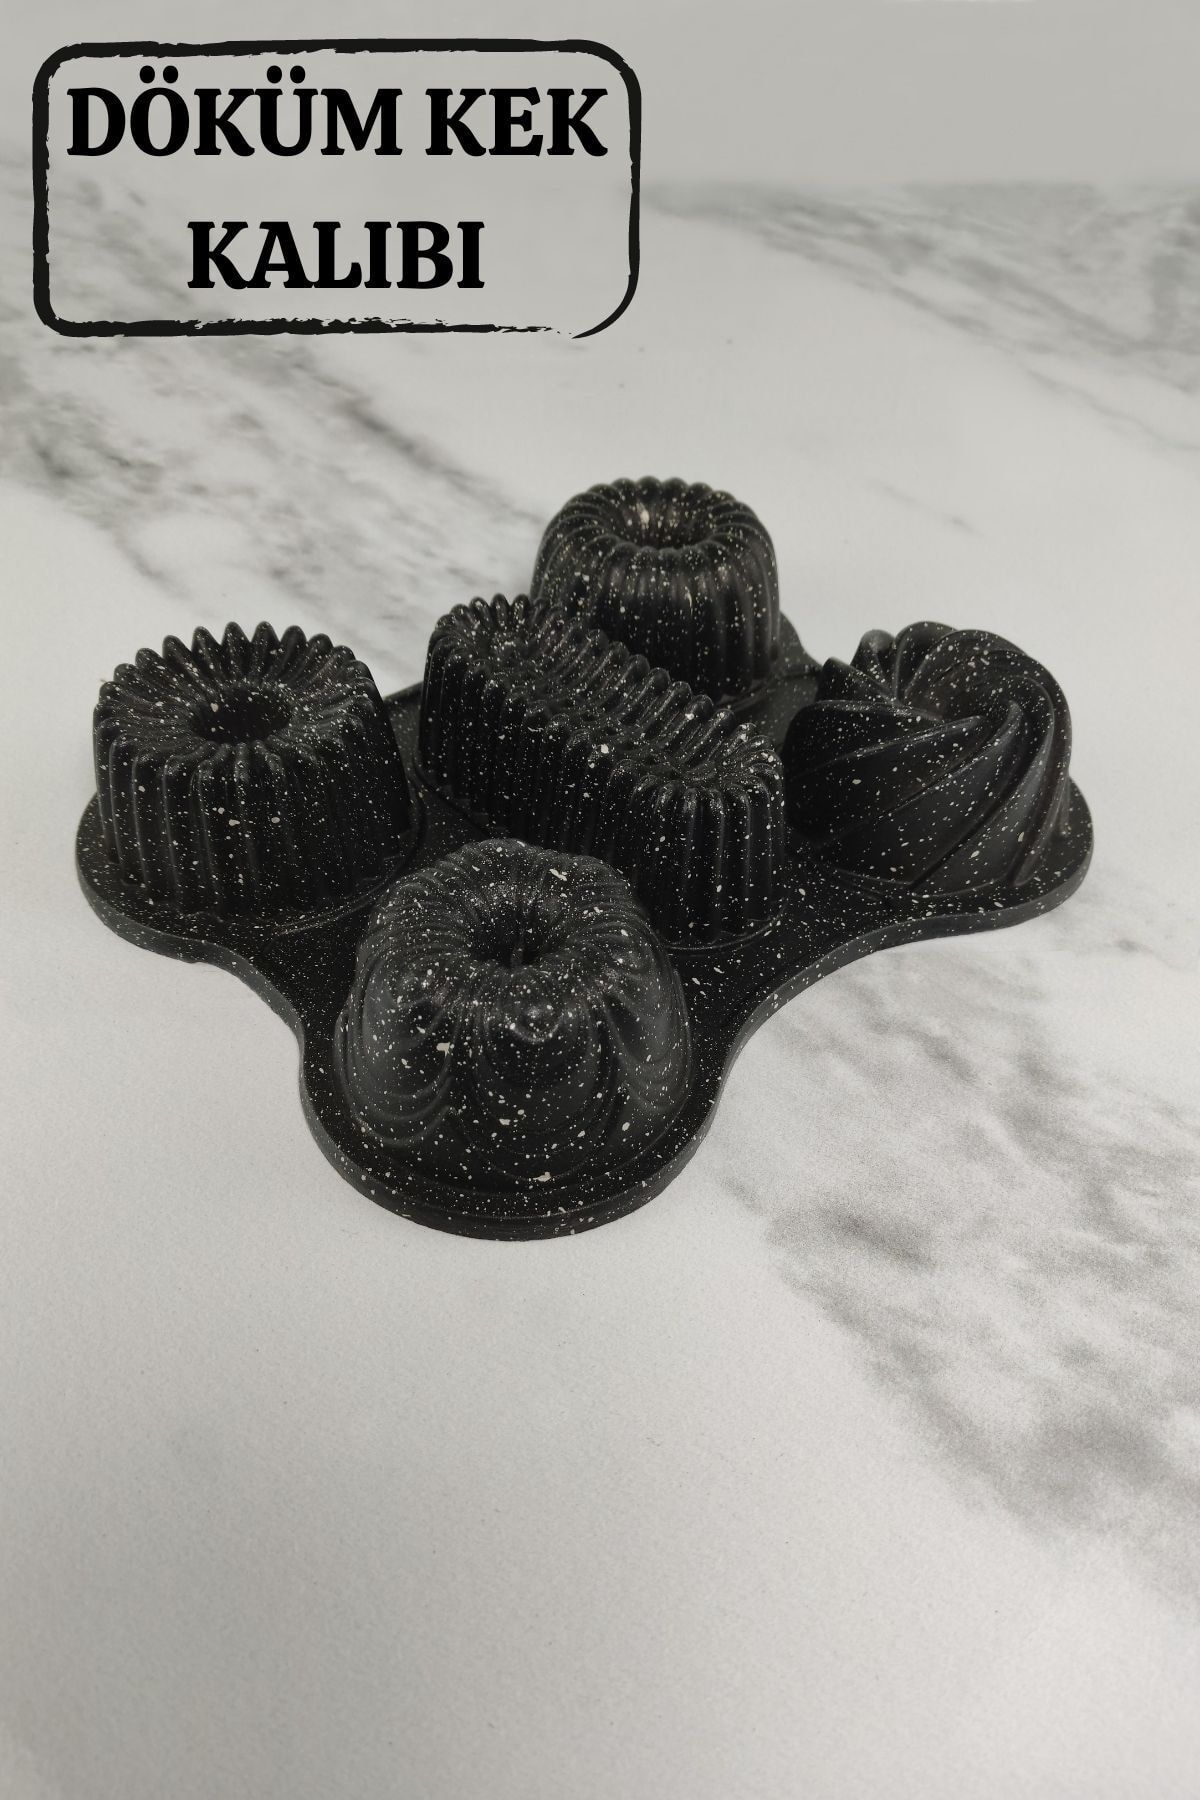 Digithome Döküm 5’li Muffin Kek Kalıbı Siyah - Mnb05417 C1-1-154